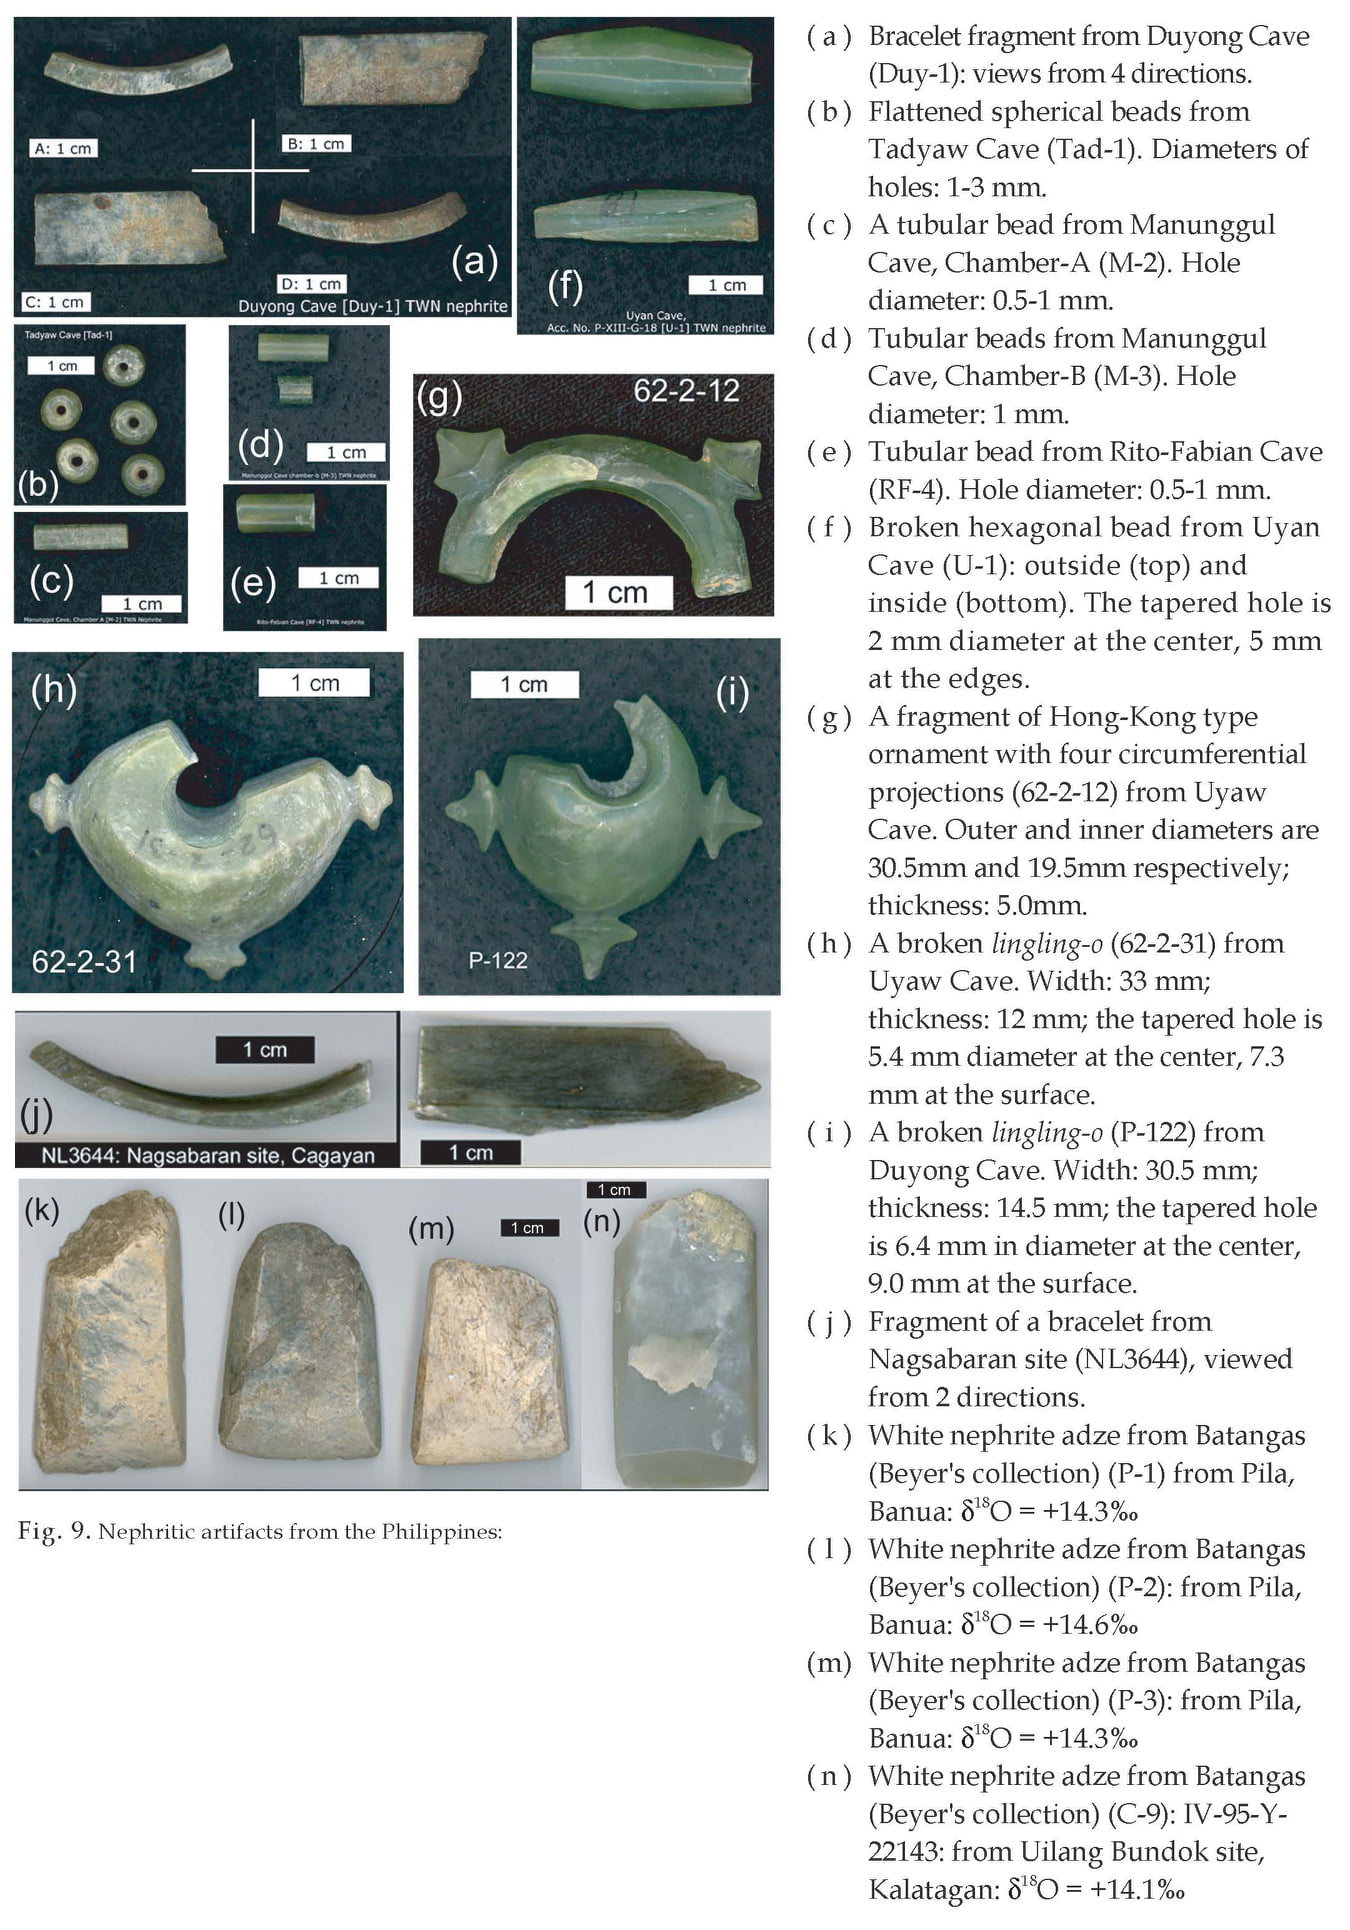 Philippine Nephrite artifacts